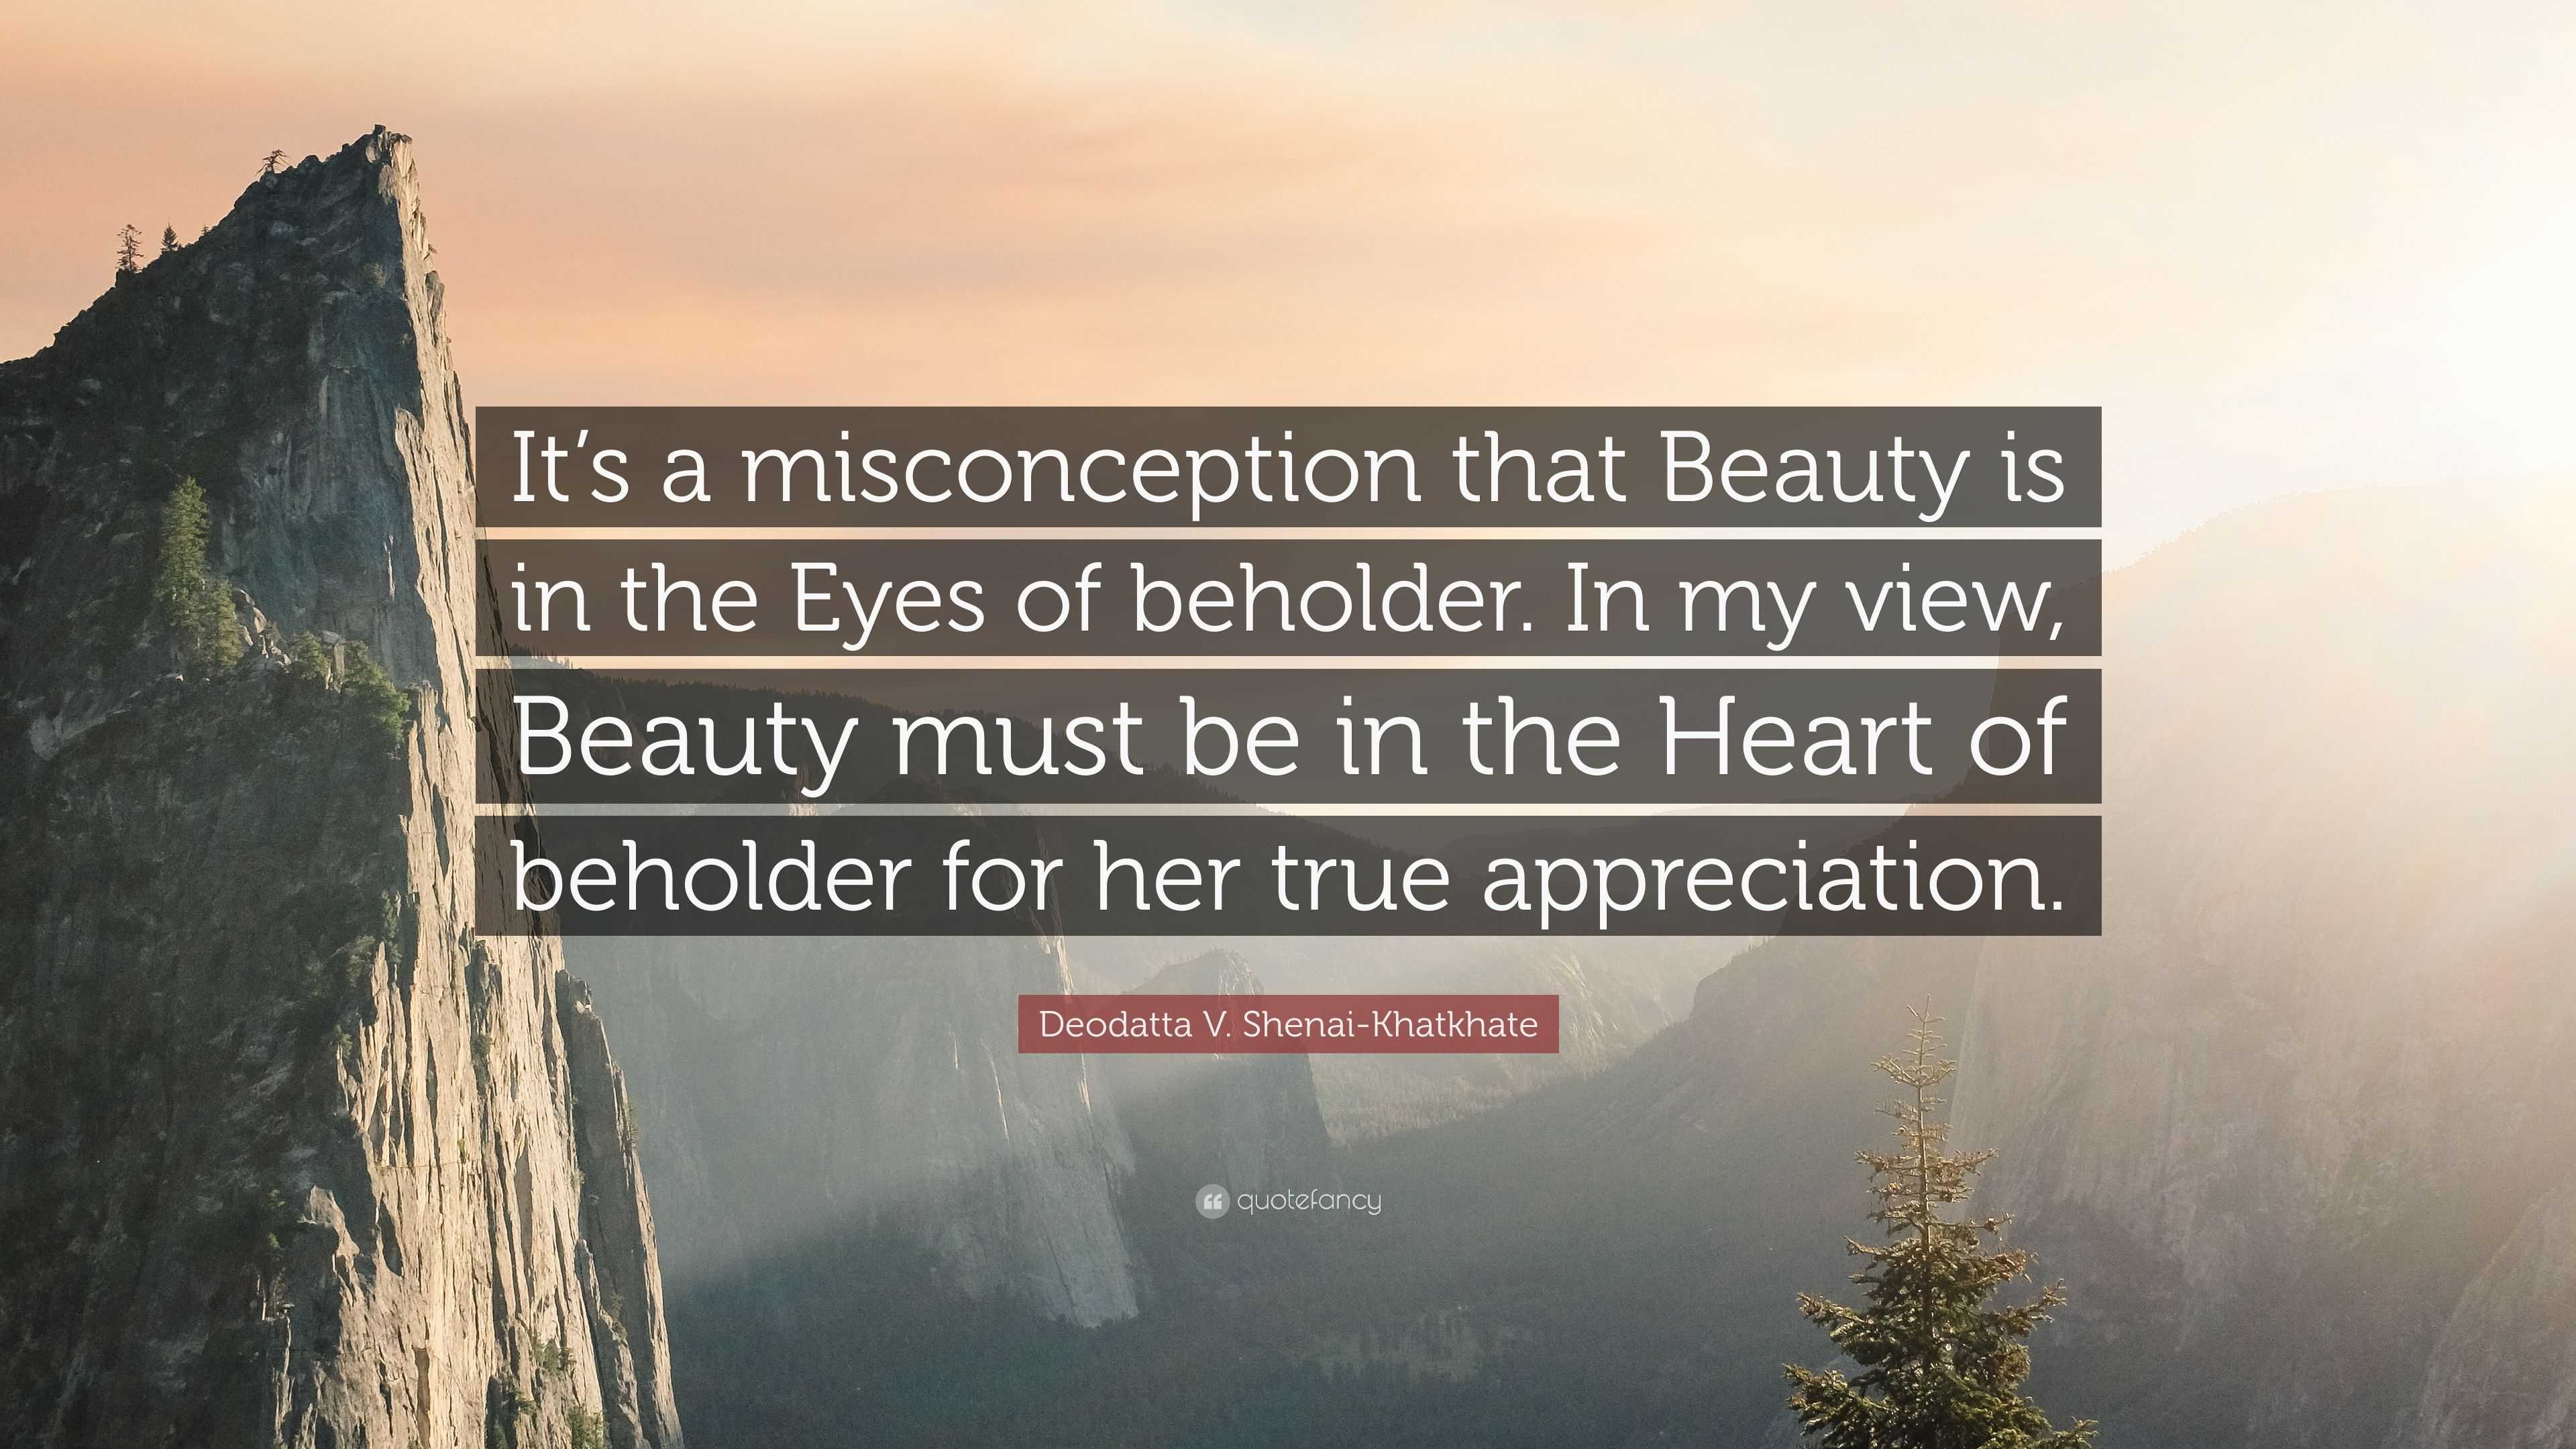 Deodatta V. Shenai-Khatkhate Quote: “It’s a misconception that Beauty ...